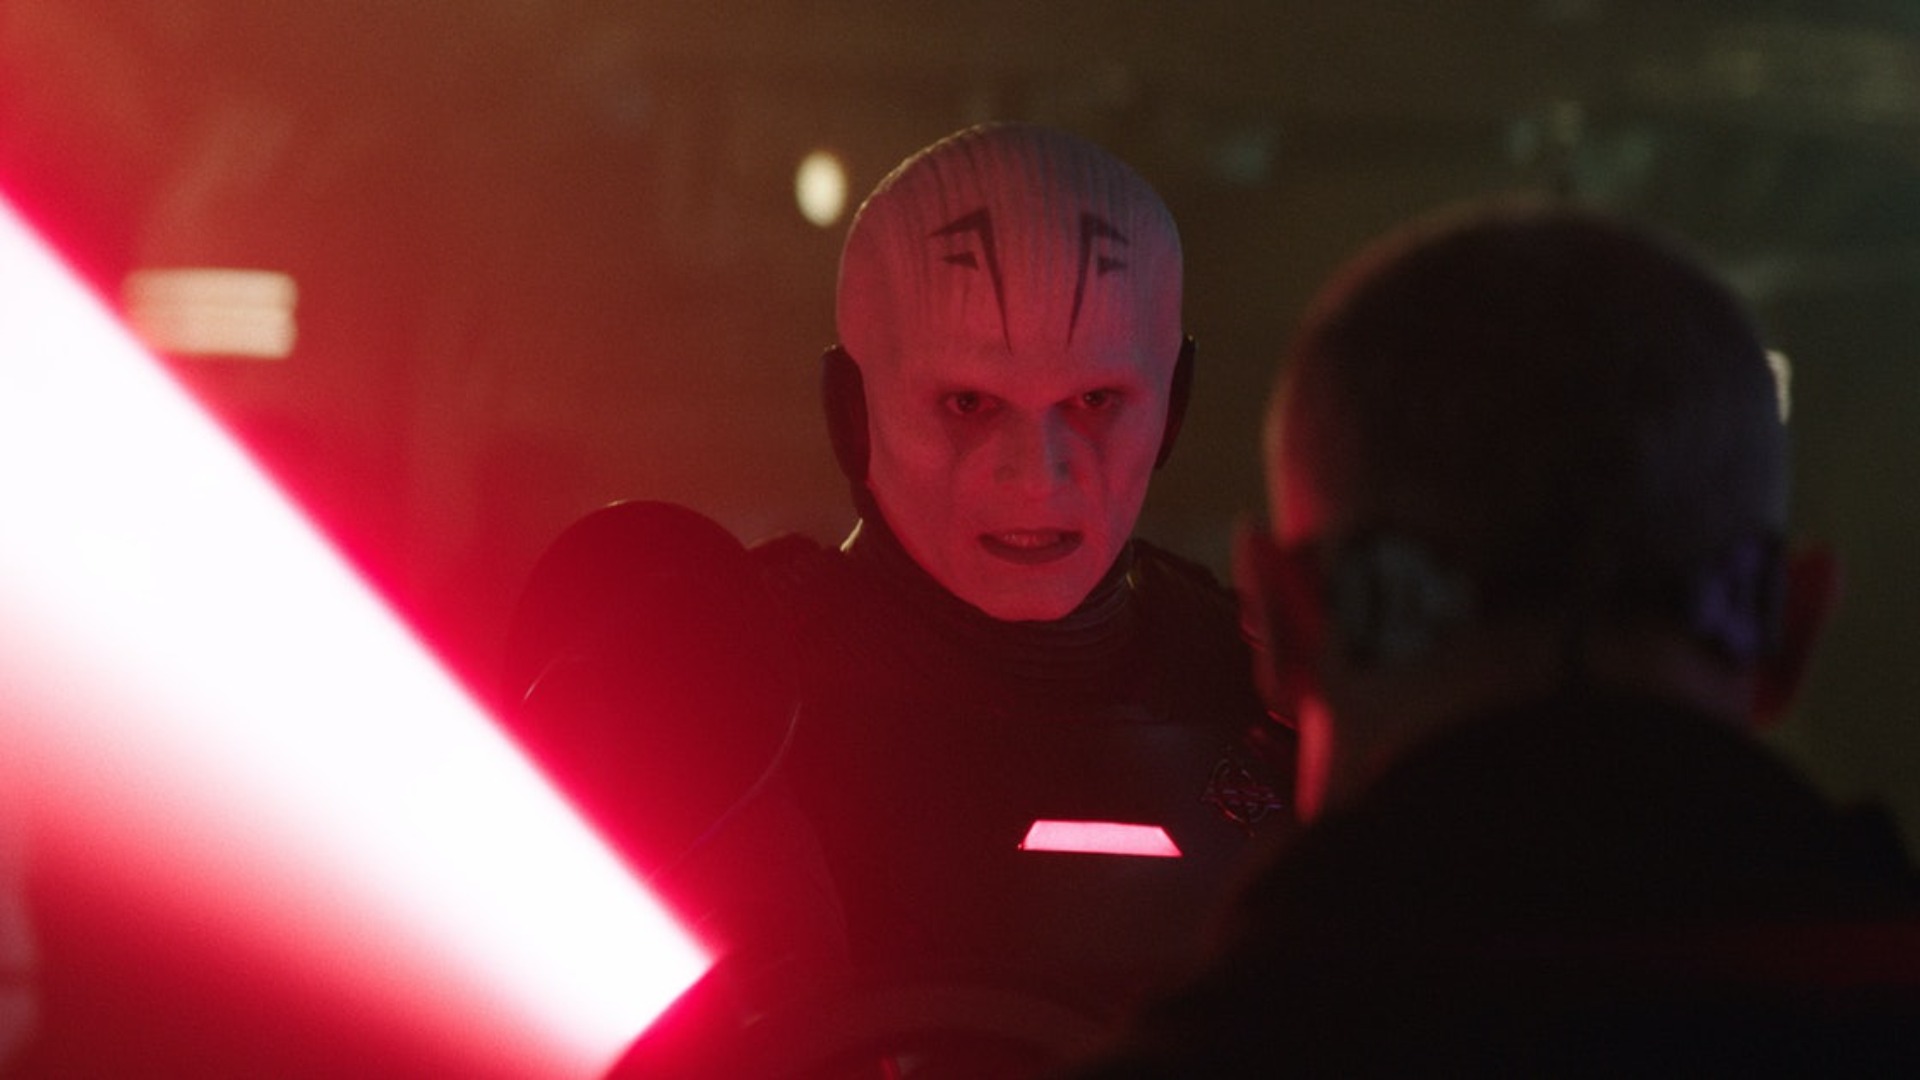 Obi-Wan Kenobi, Anakin Skywalker Coming to 'Star Wars Battlefront II